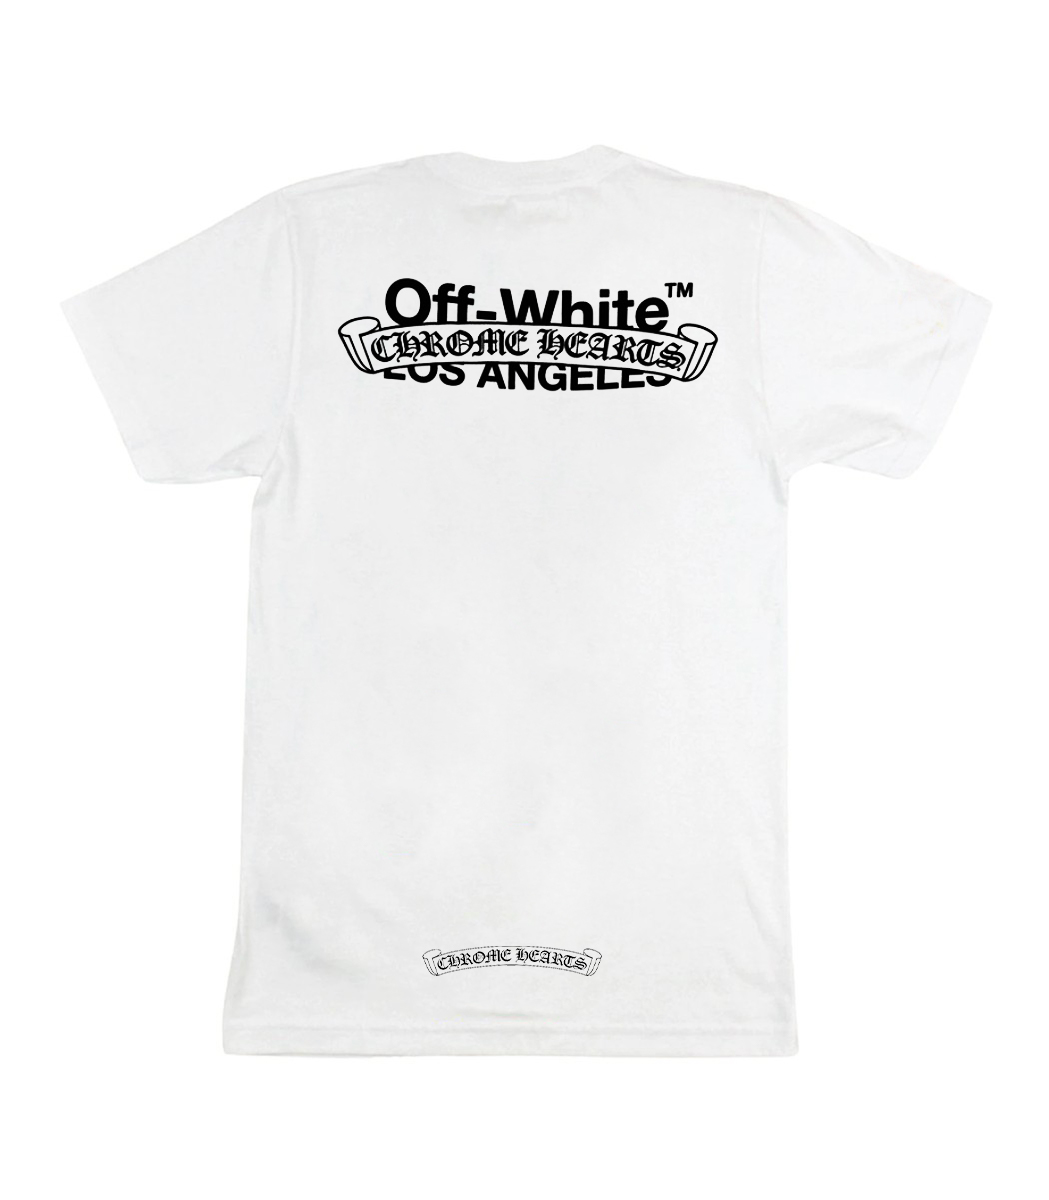 Off-White x Chrome Hearts Los Angeles T-Shirt - Chrome Hearts 